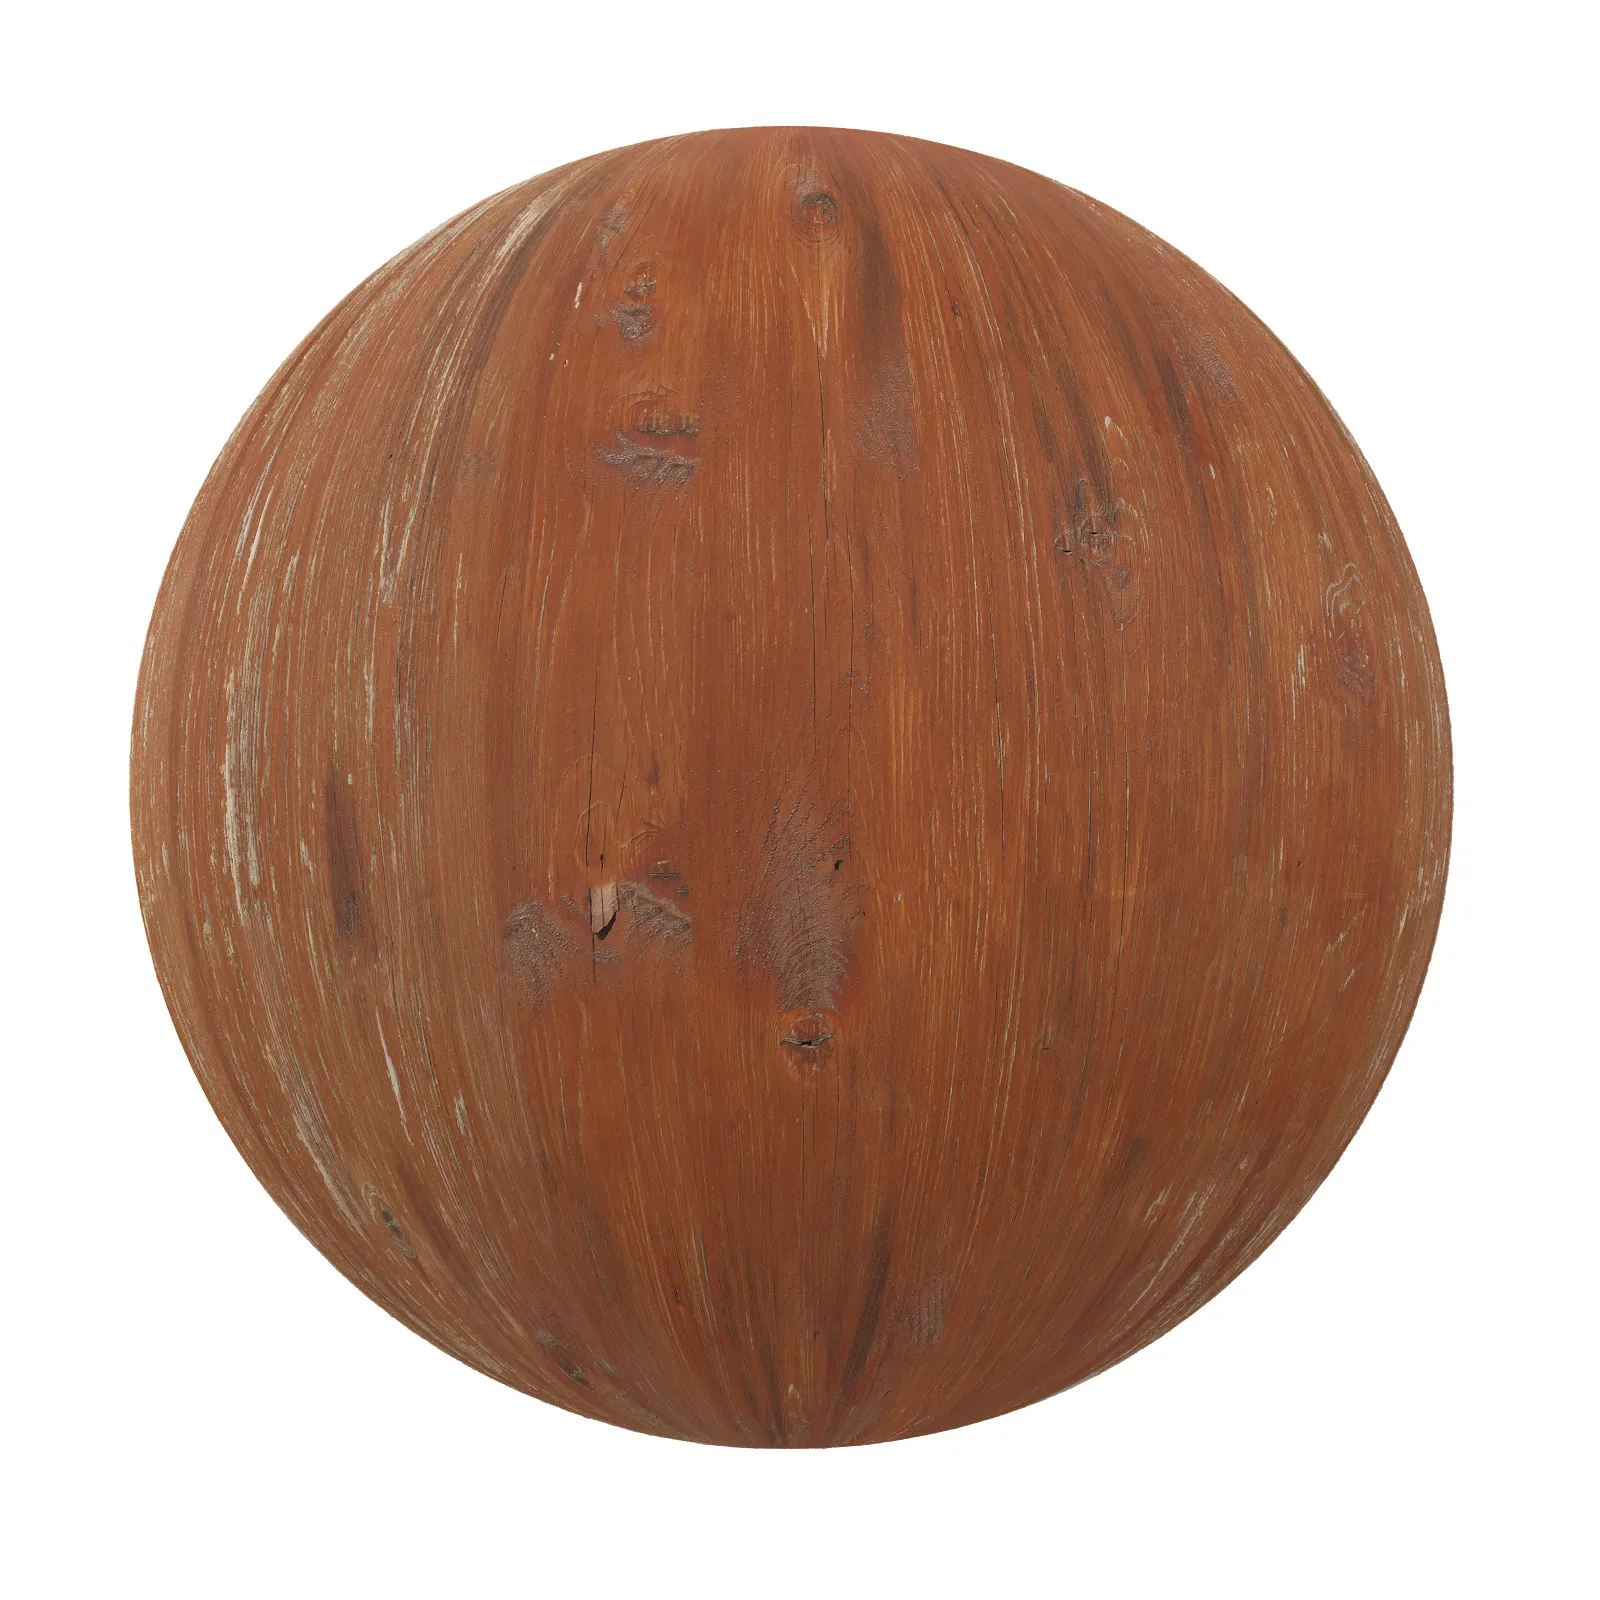 3ds Max Files – Texture – 8 – Wood Texture – 124 – Wood Texture by Minh Nguyen.